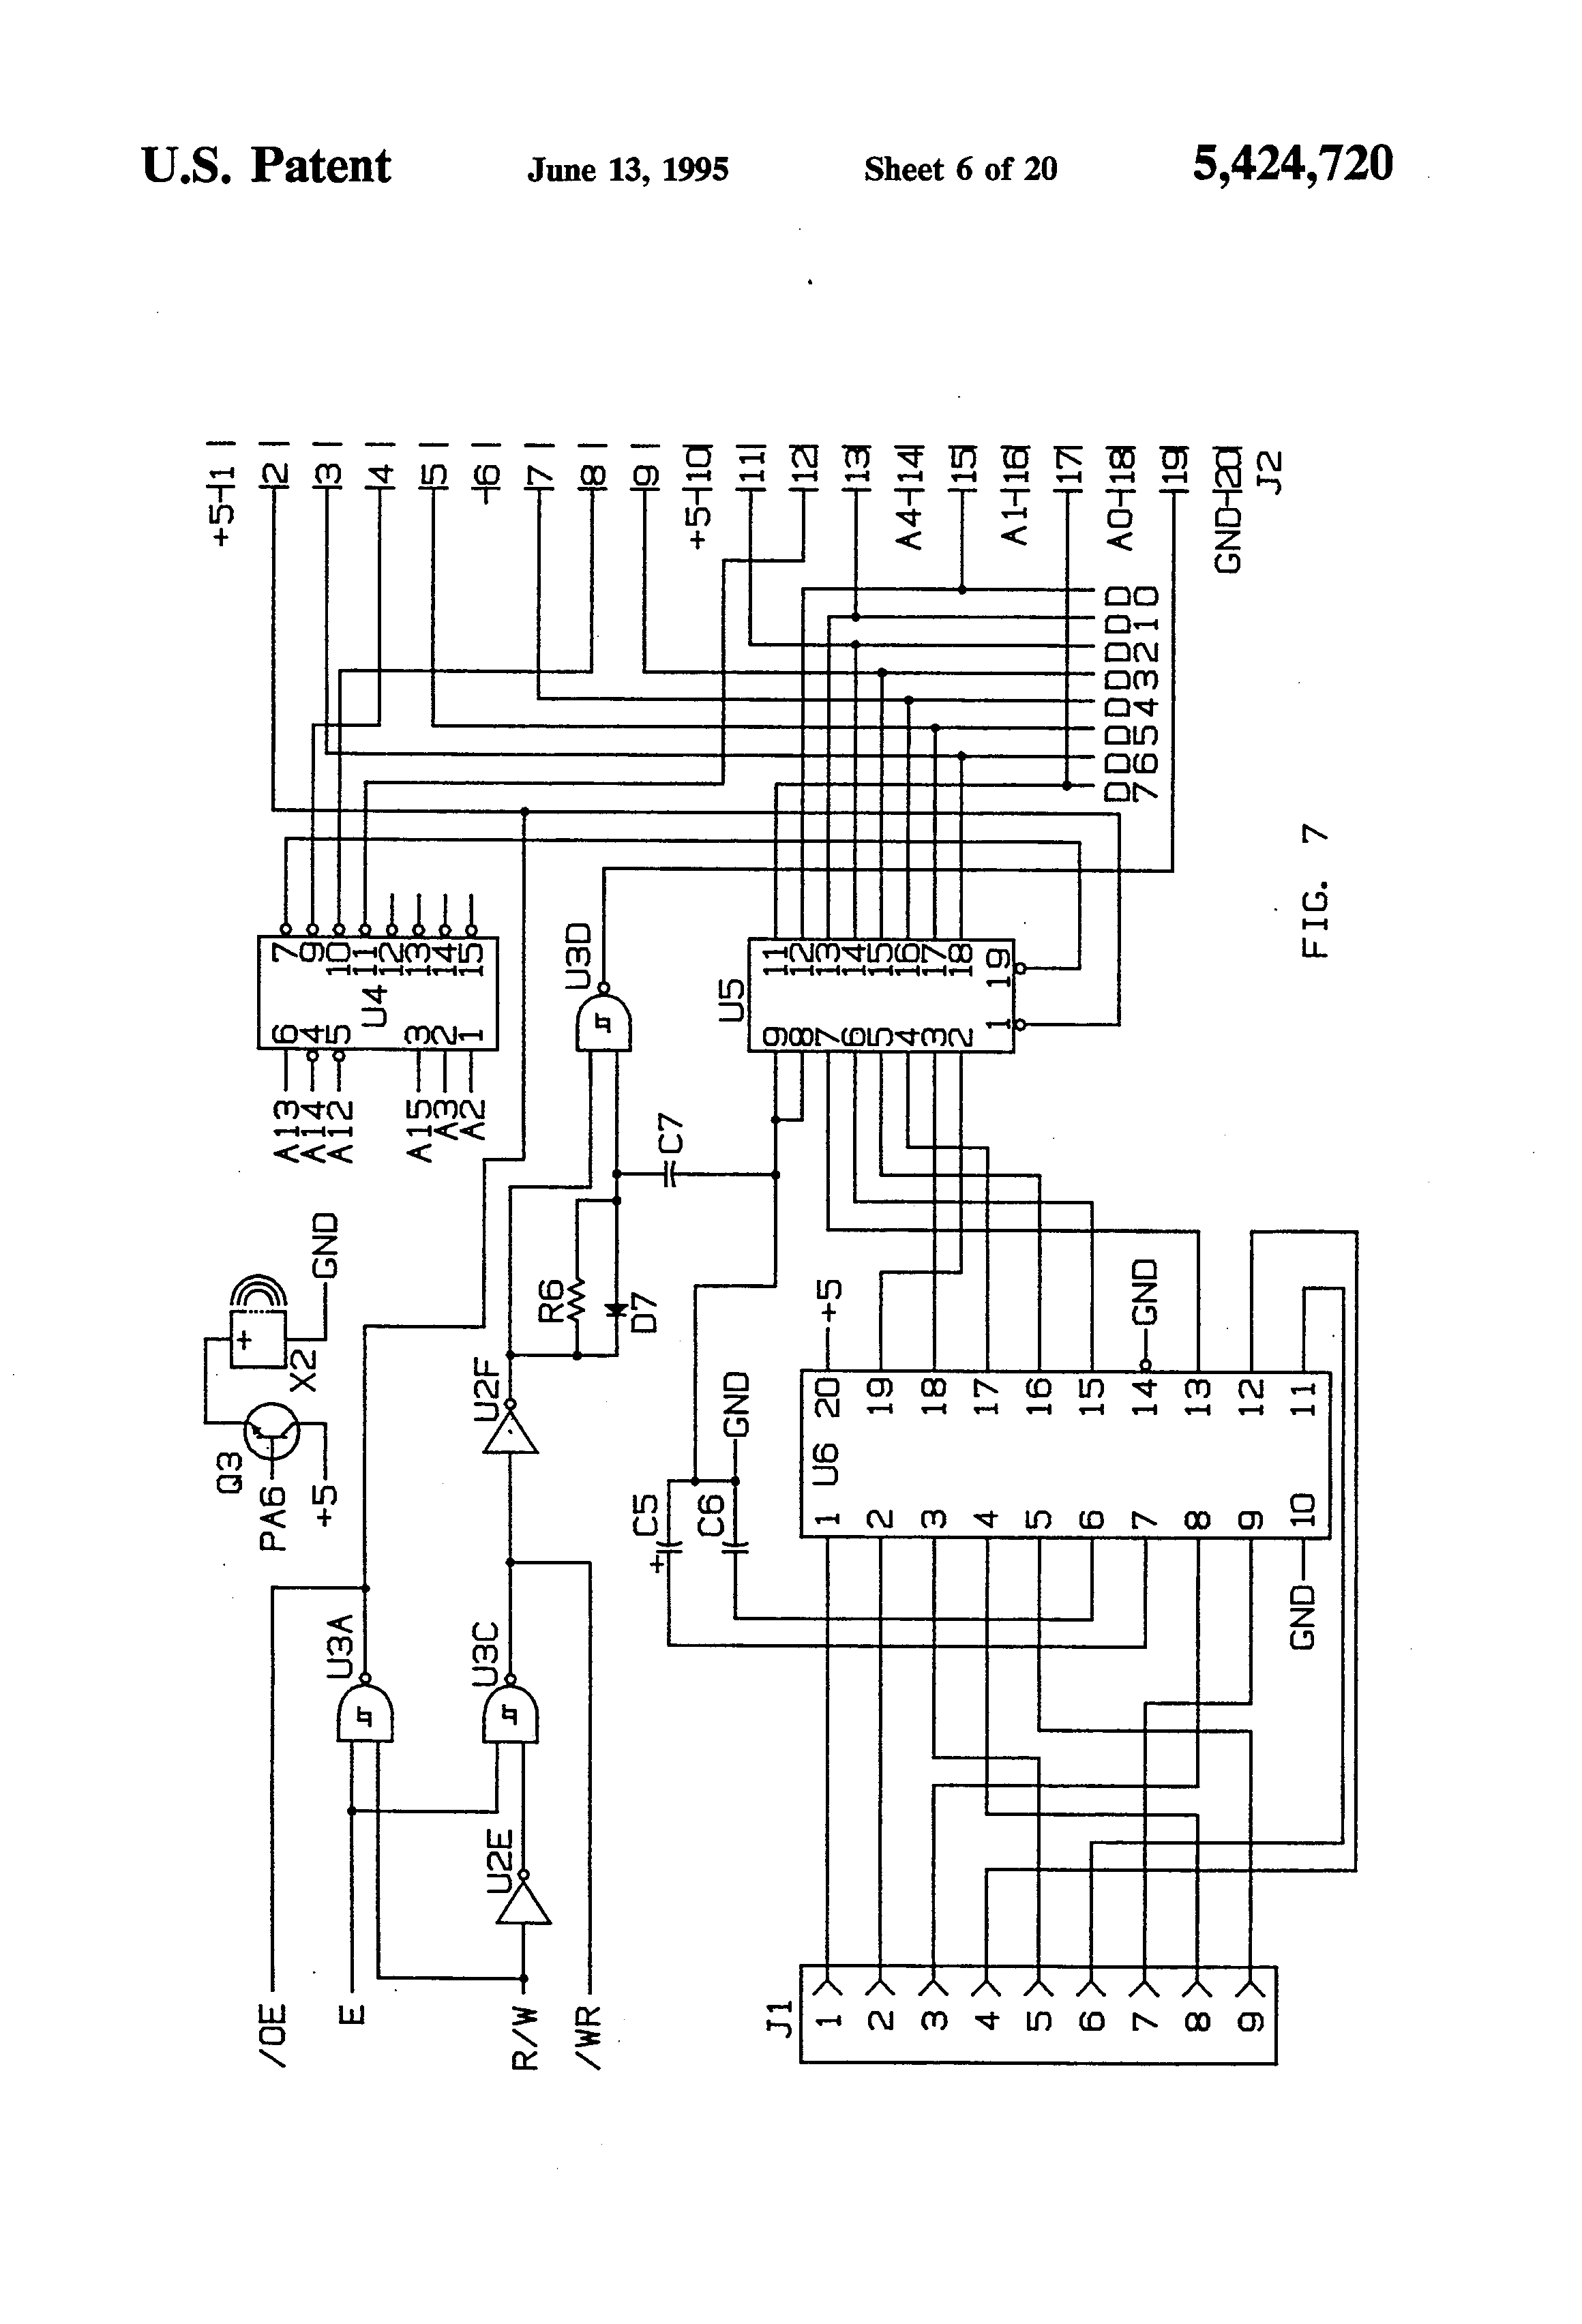 hussmann wiring diagram